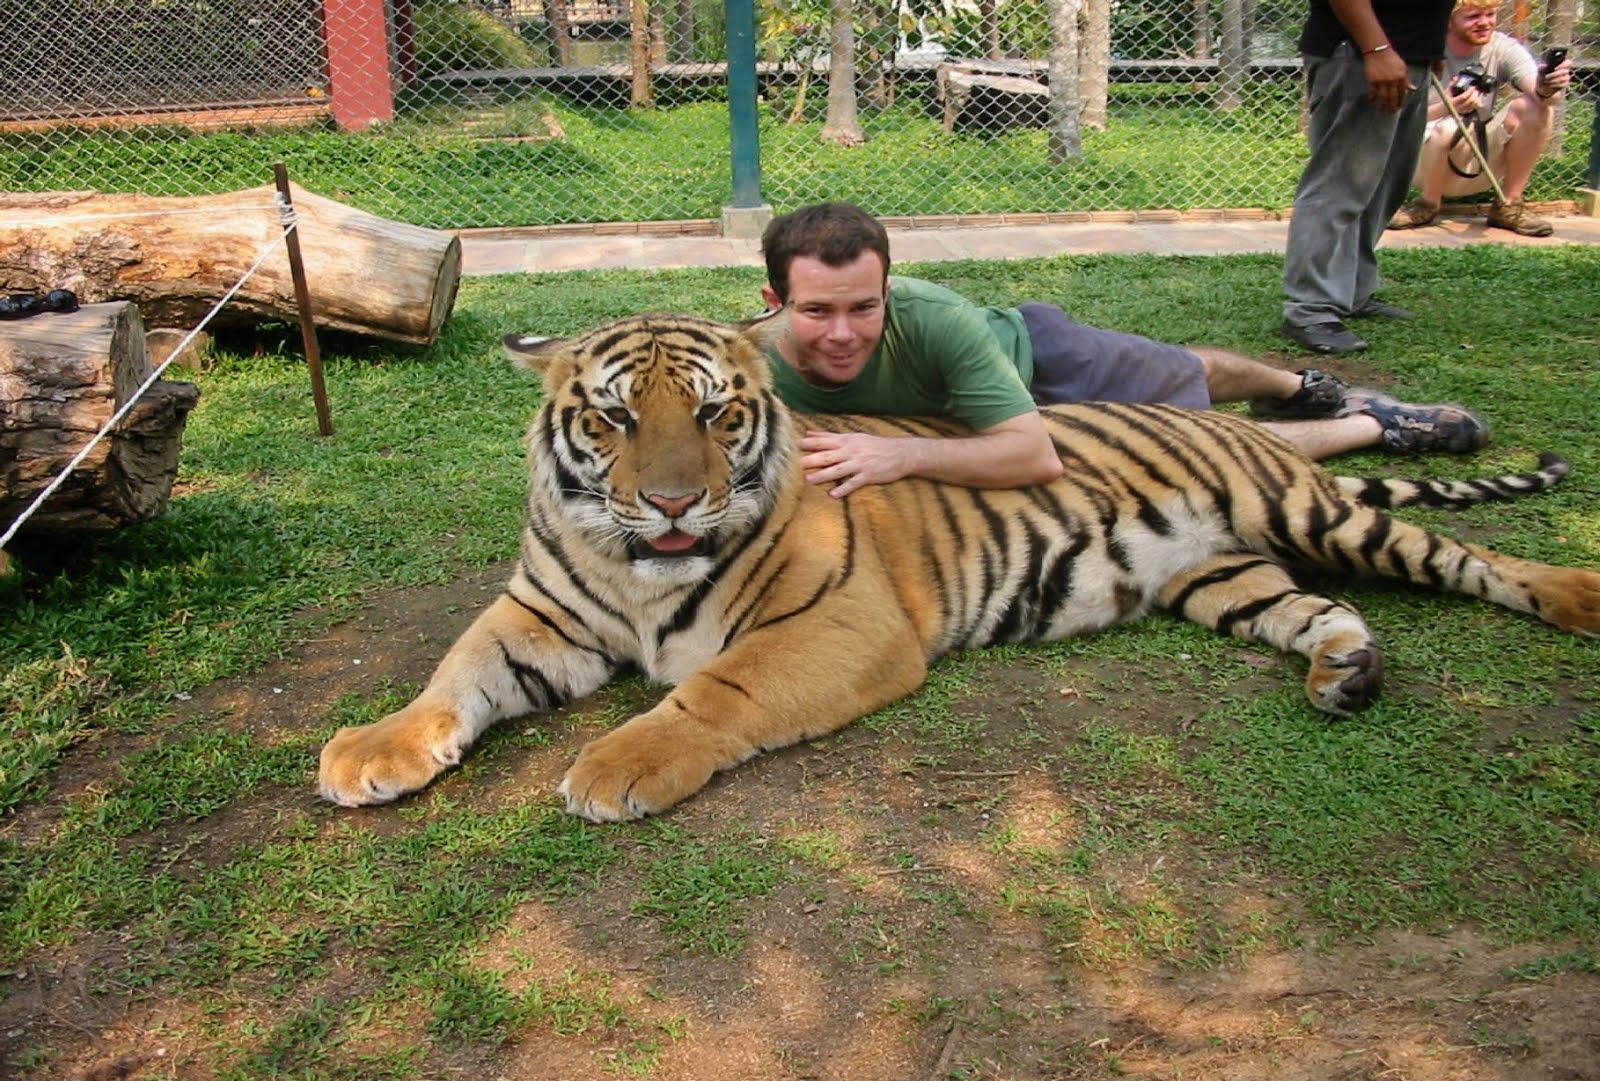 Hug a Tiger for Fun